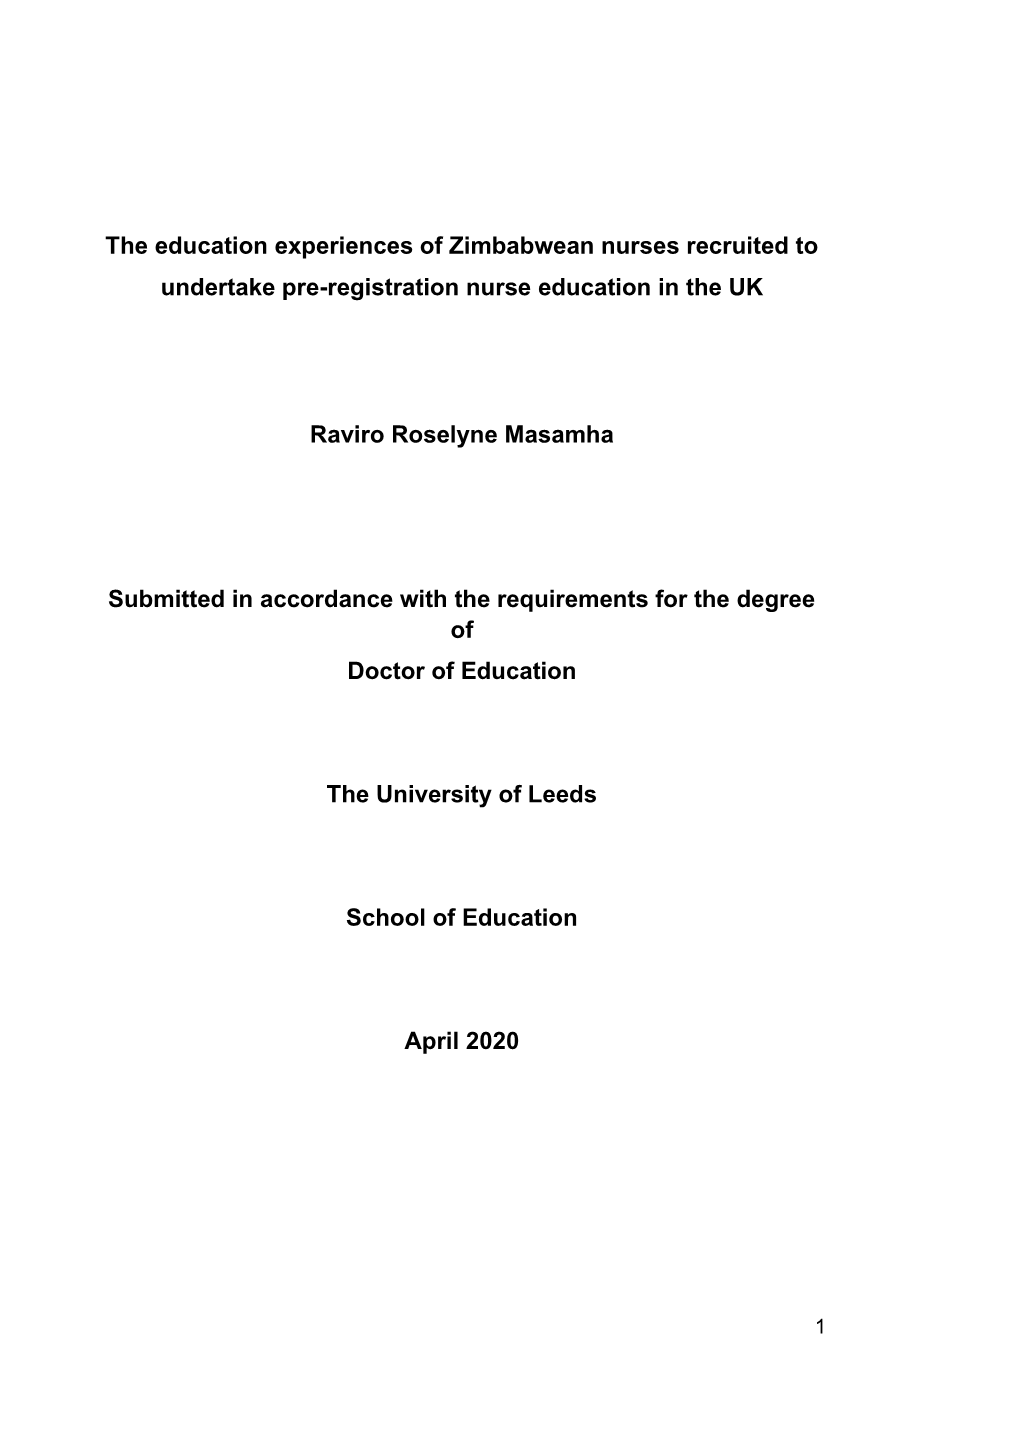 The Education Experiences of Zimbabwean Nurses Recruited to Undertake Pre-Registration Nurse Education in the UK Raviro Roselyne